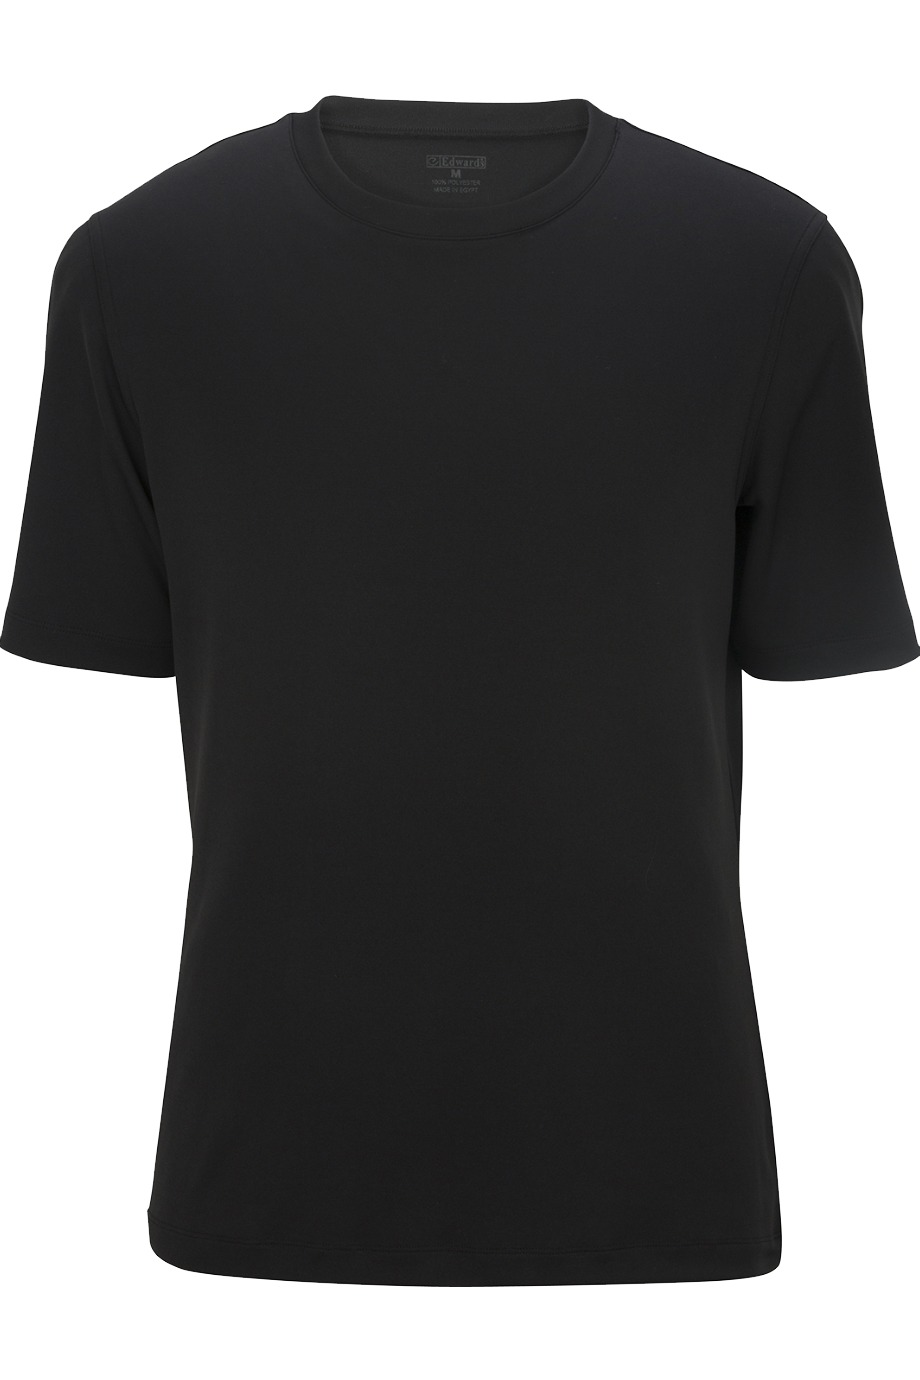 Edwards Garment 1514 - Men's Crew Neck T-Shirt